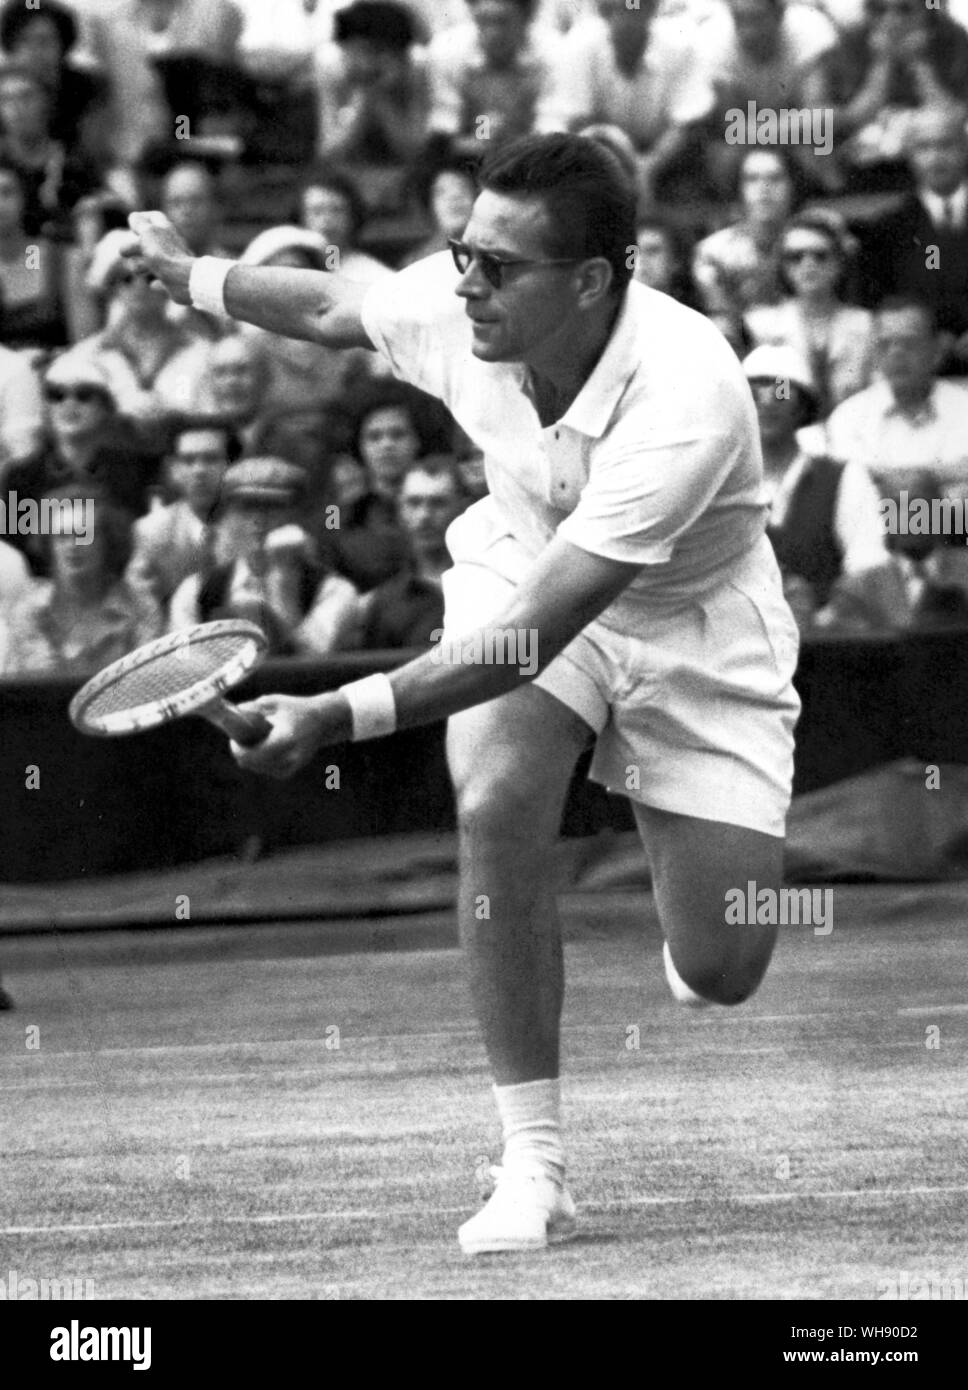 Jaroslav Drobny of Egypt at Wimbledon in 1953 Stock Photo - Alamy